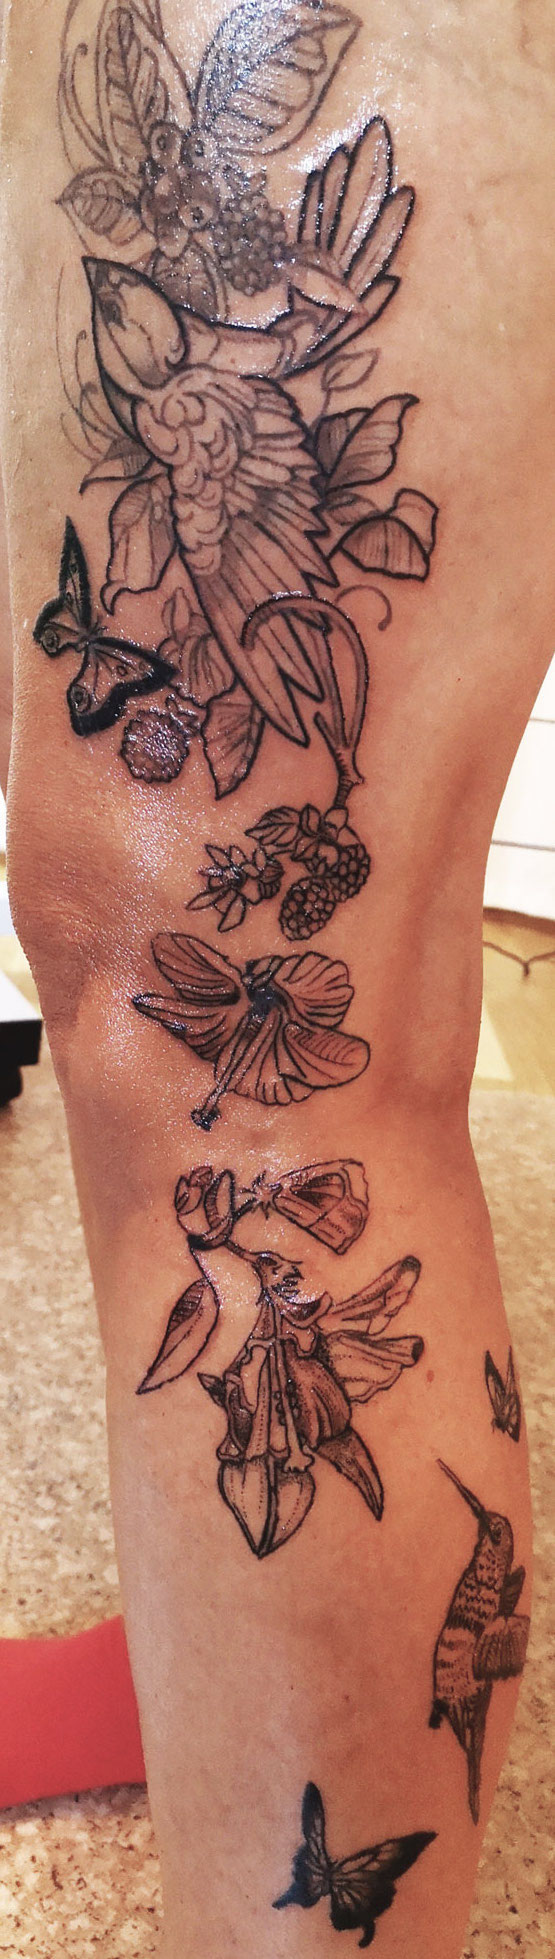 Tattoo Birds and plants Elmar Karla